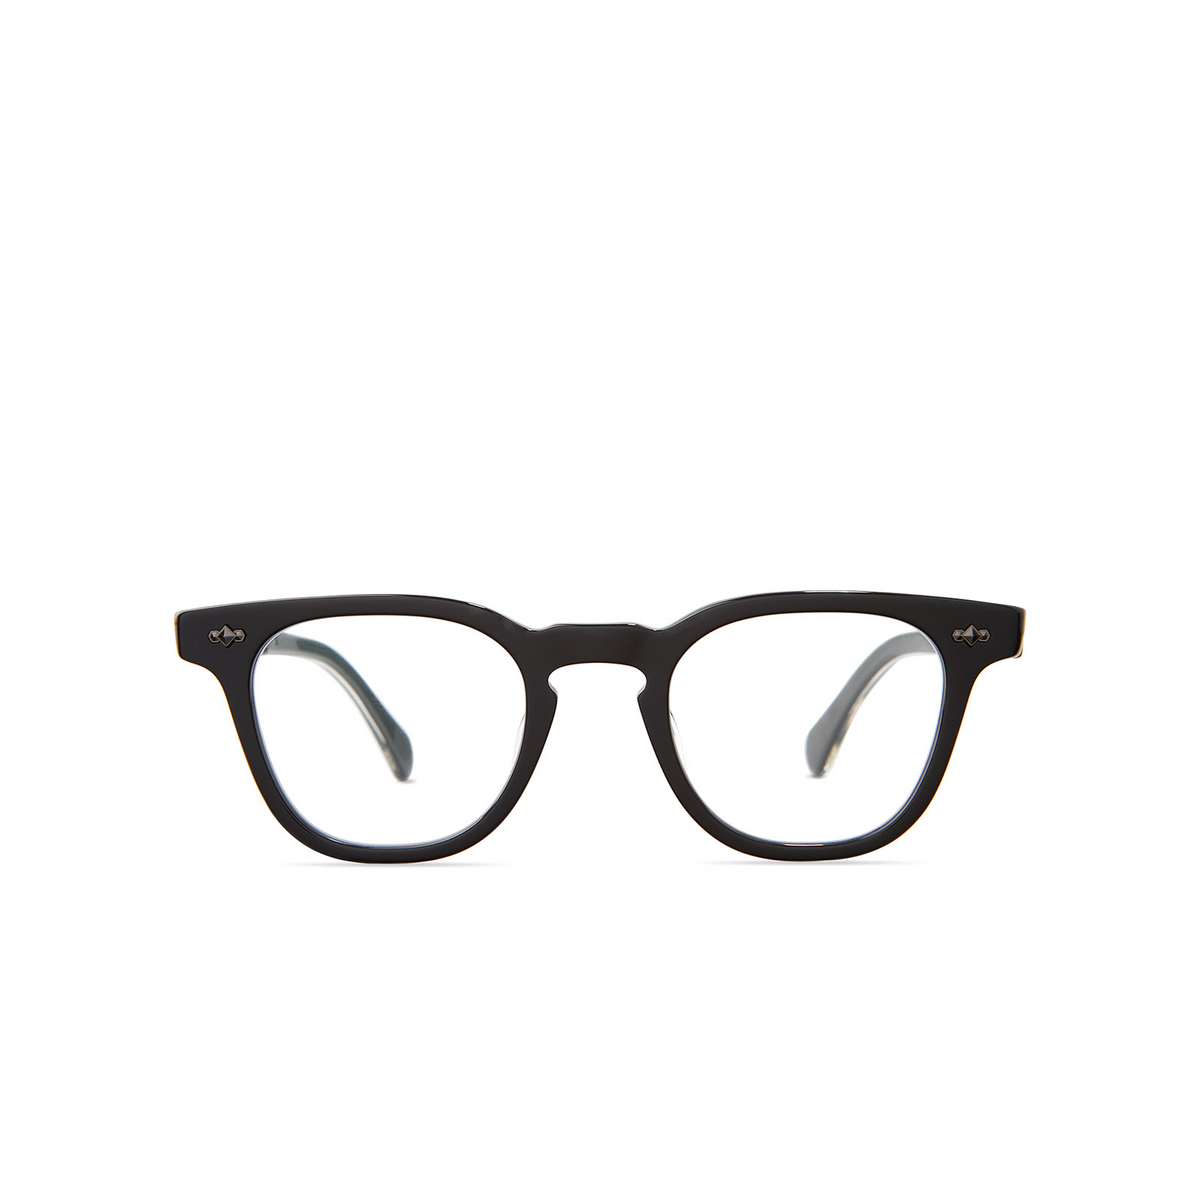 Mr. Leight DEAN C Eyeglasses BK-PW 44 Black-Pewter - front view